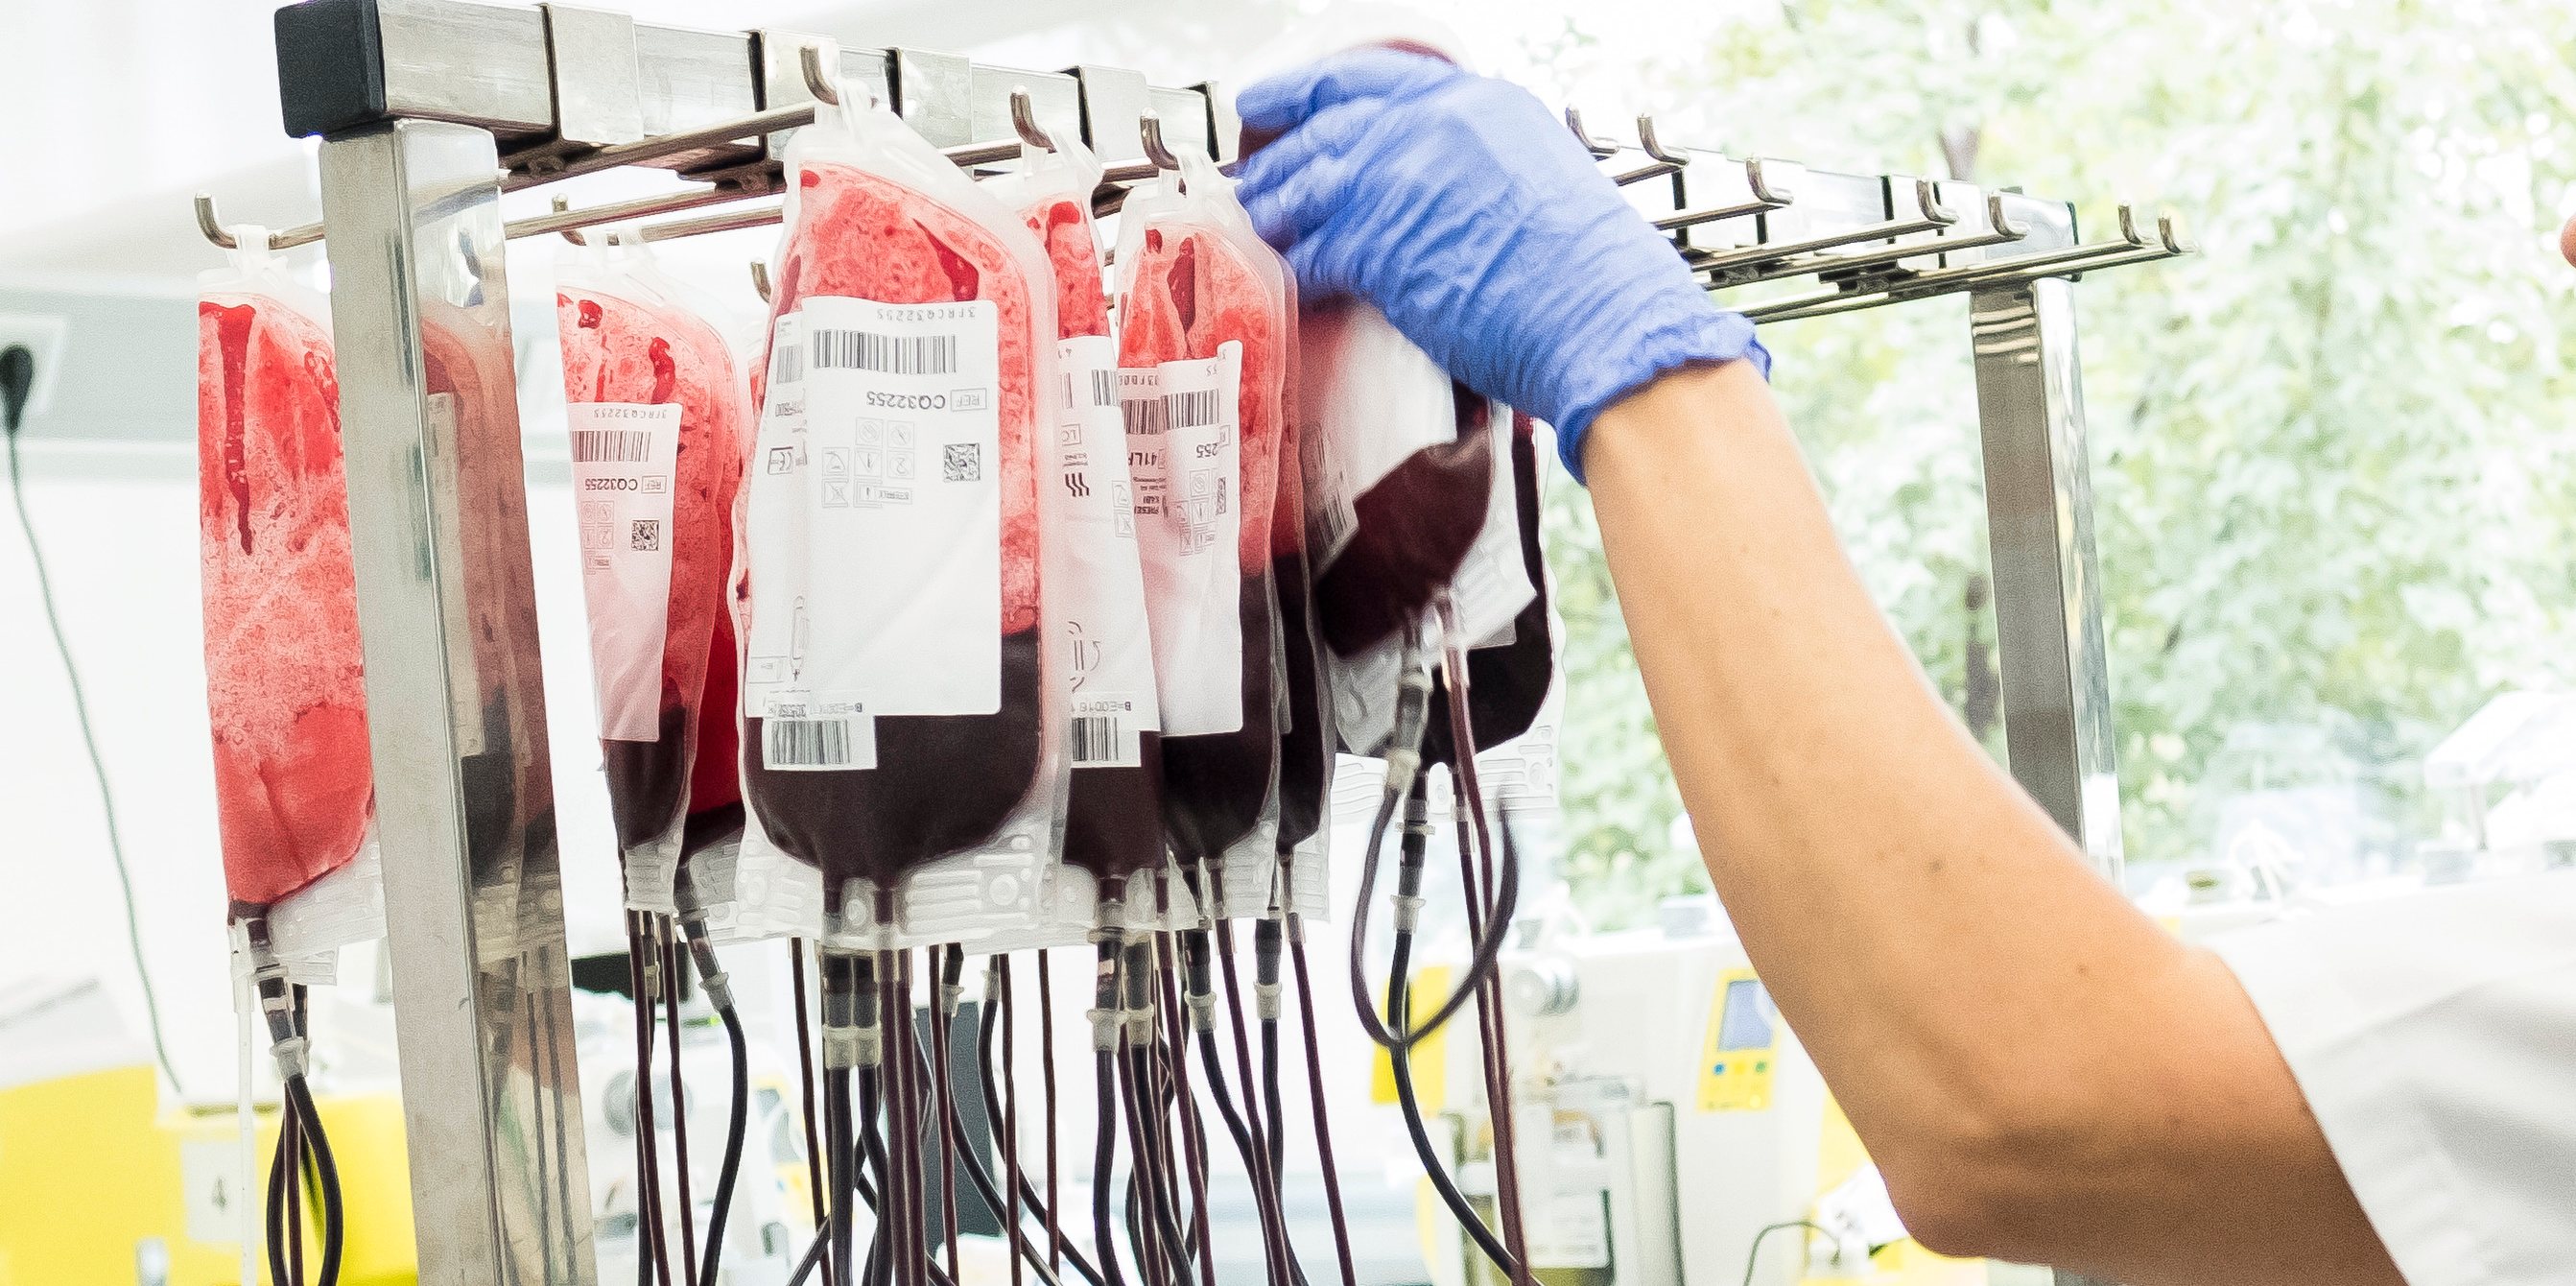 Blood Transfusion Center of Madrid